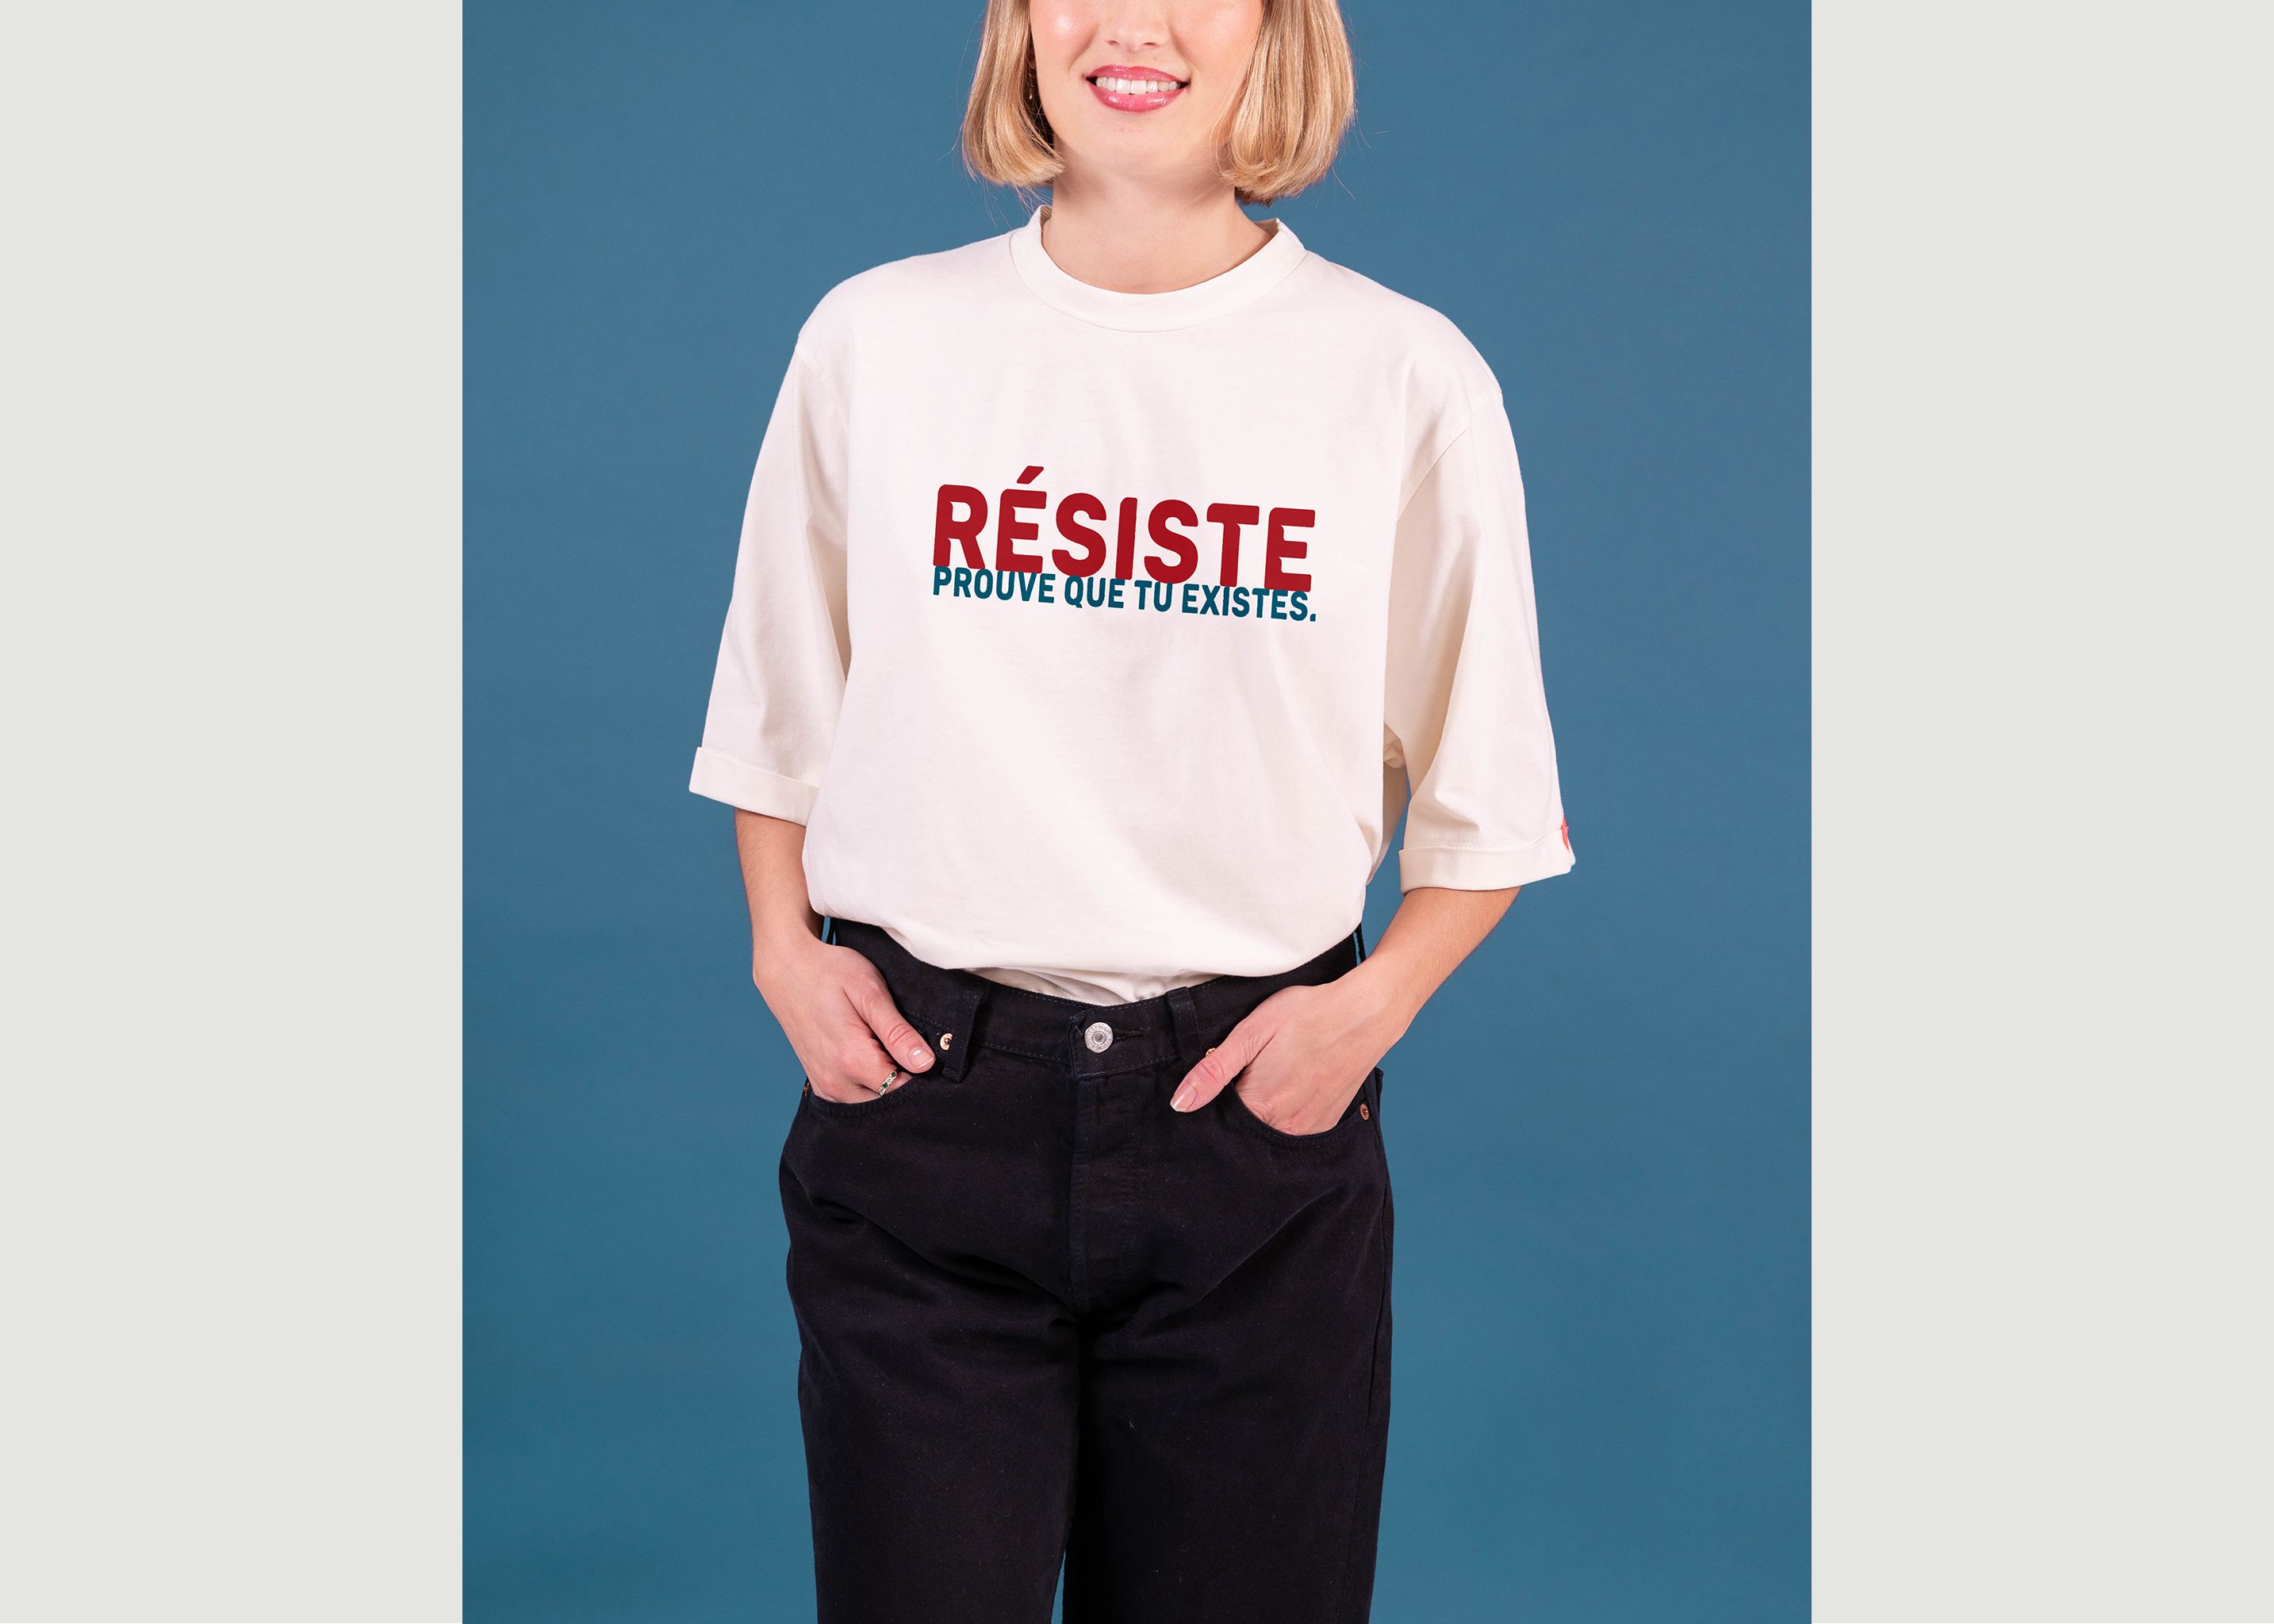 T-shirt resiste proves that you exist - Meuf